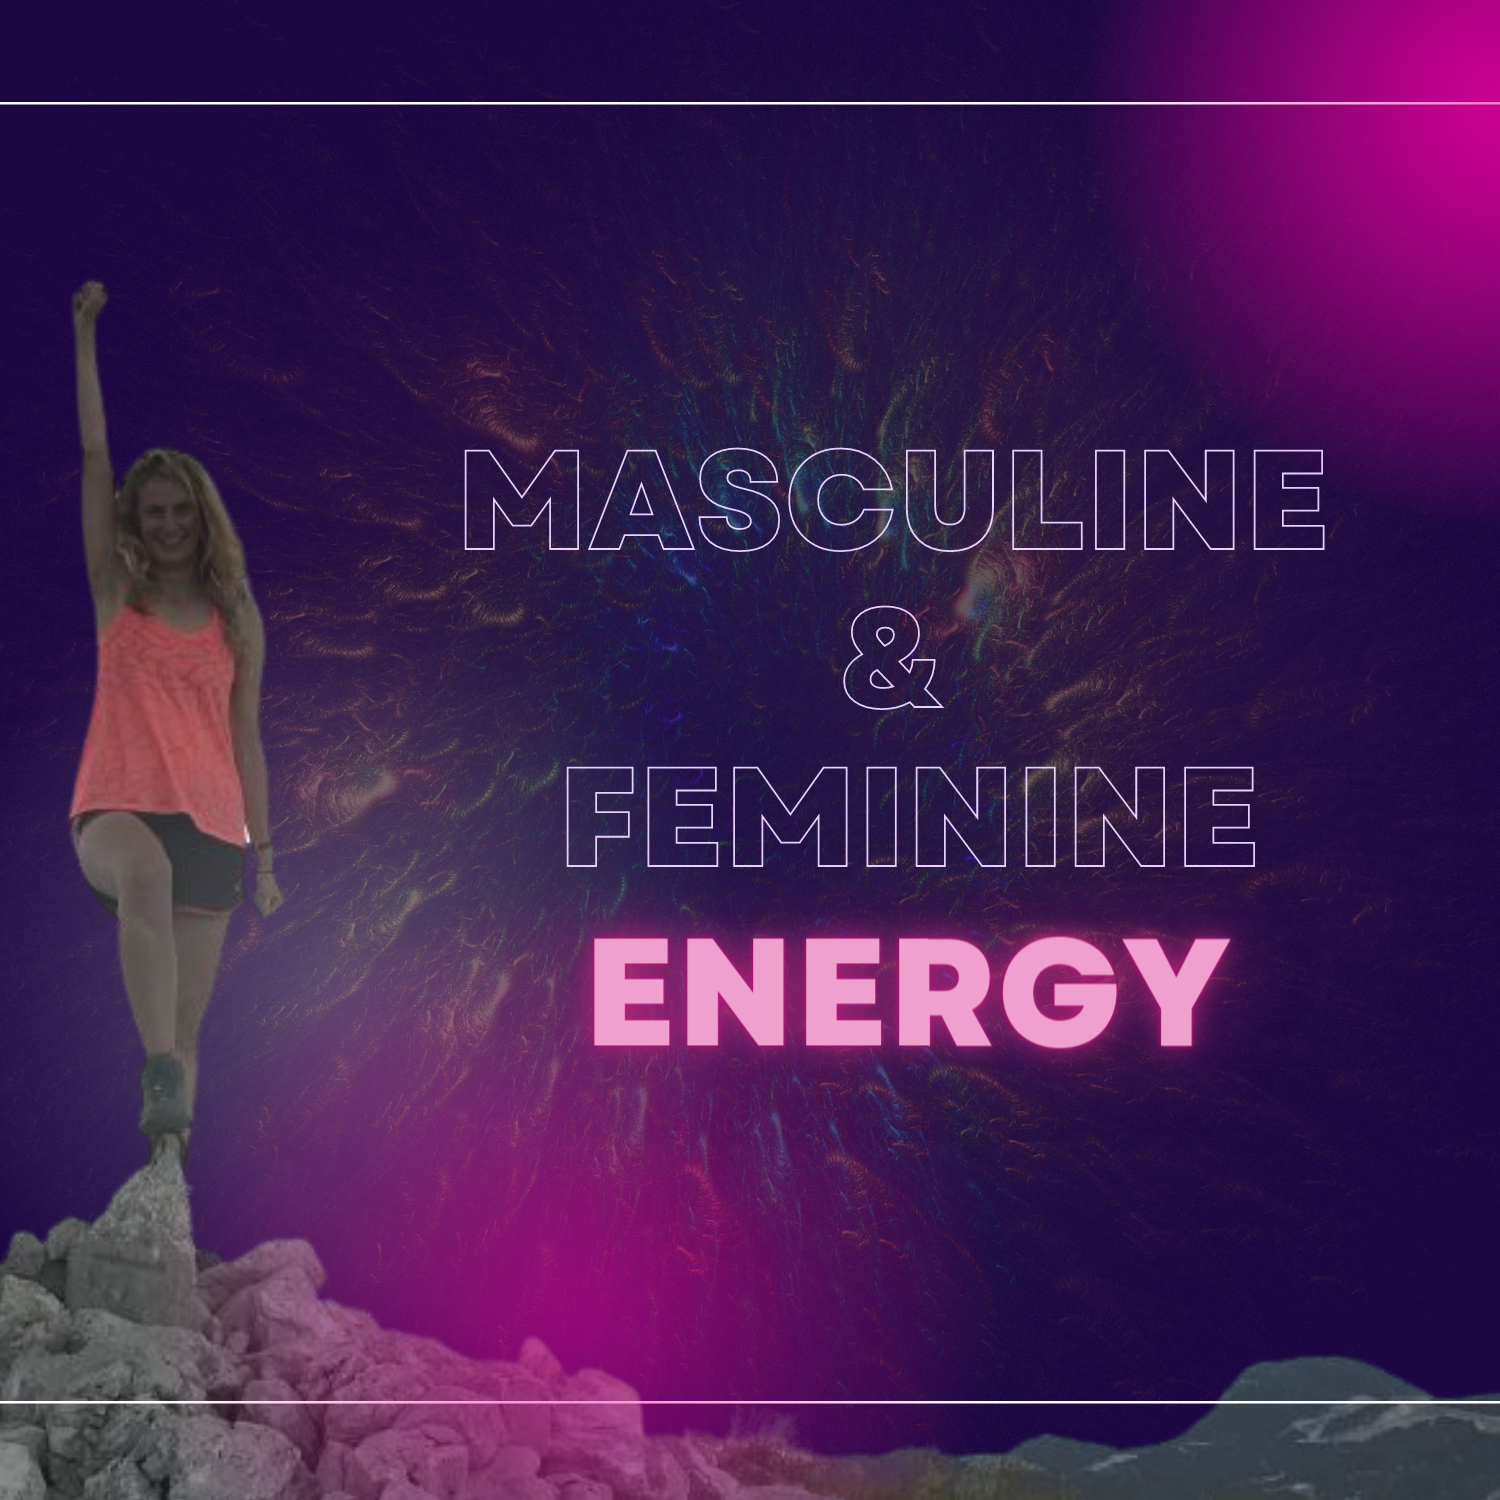 Masculine and Feminine energy